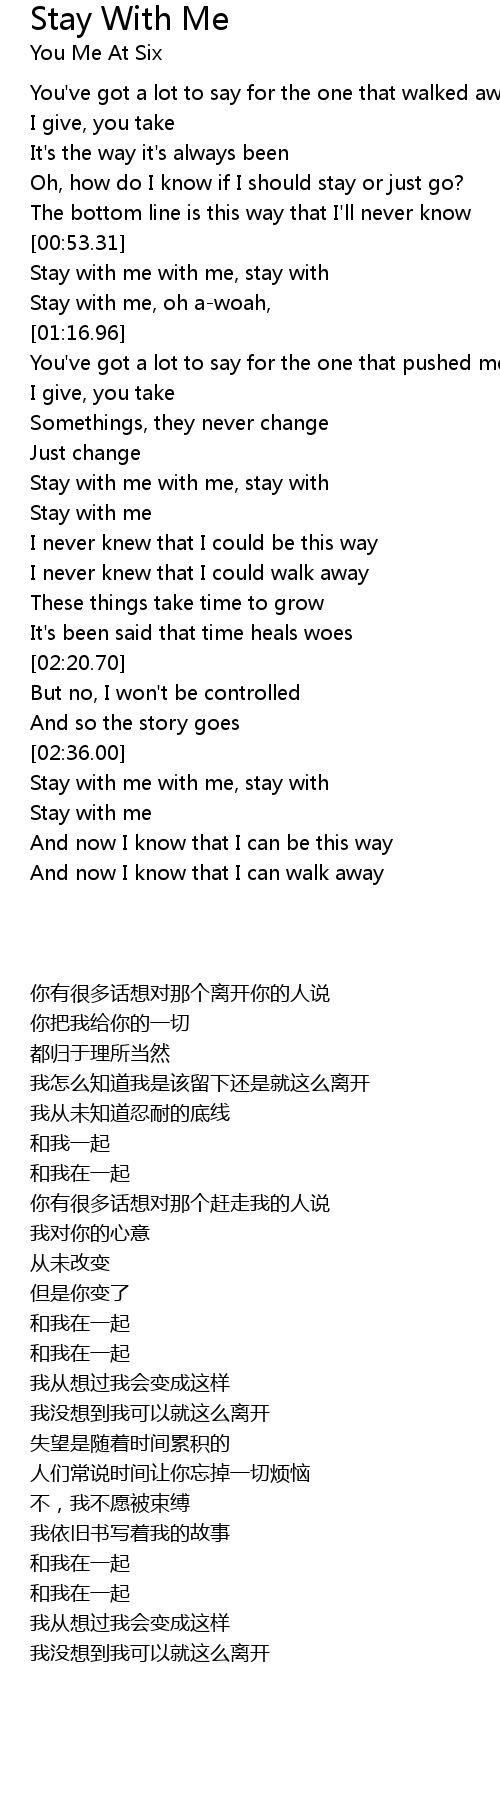 Stay with me lyrics